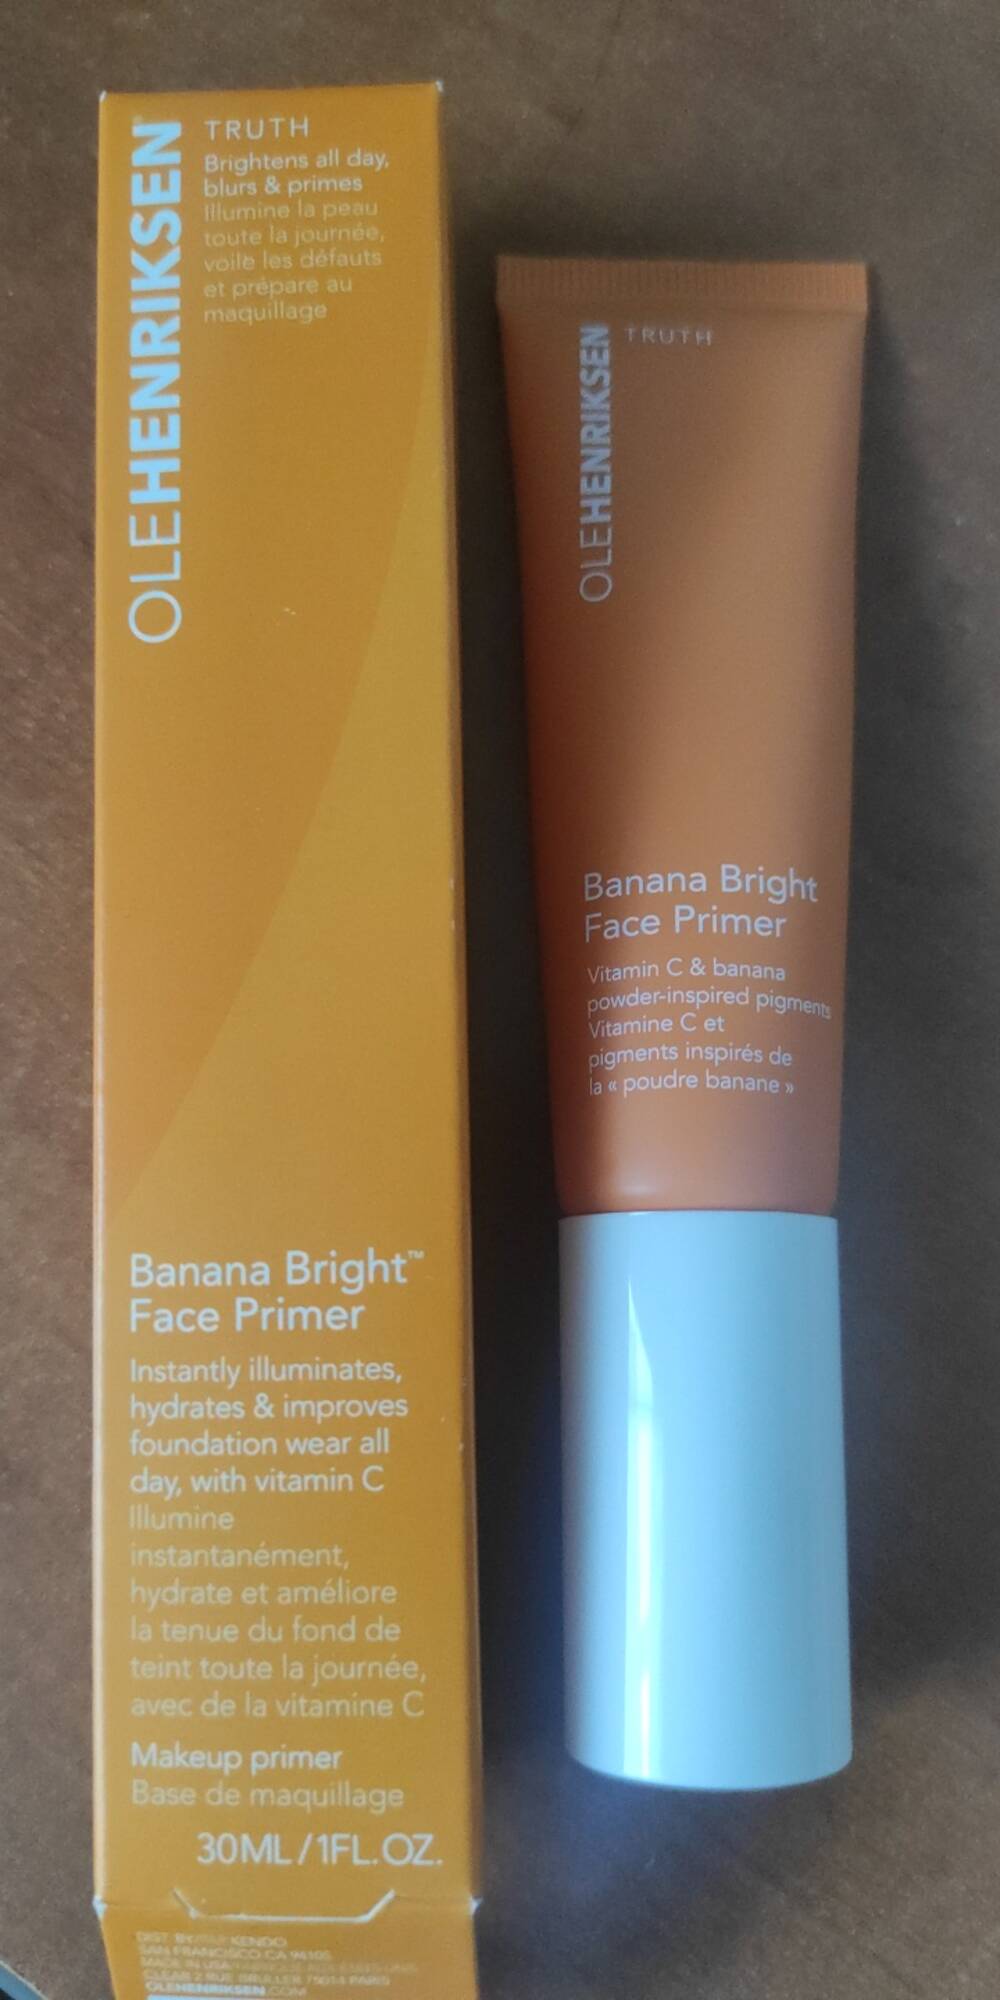 OLE HENRIKSEN - Banana bright face primer - Base de maquillage